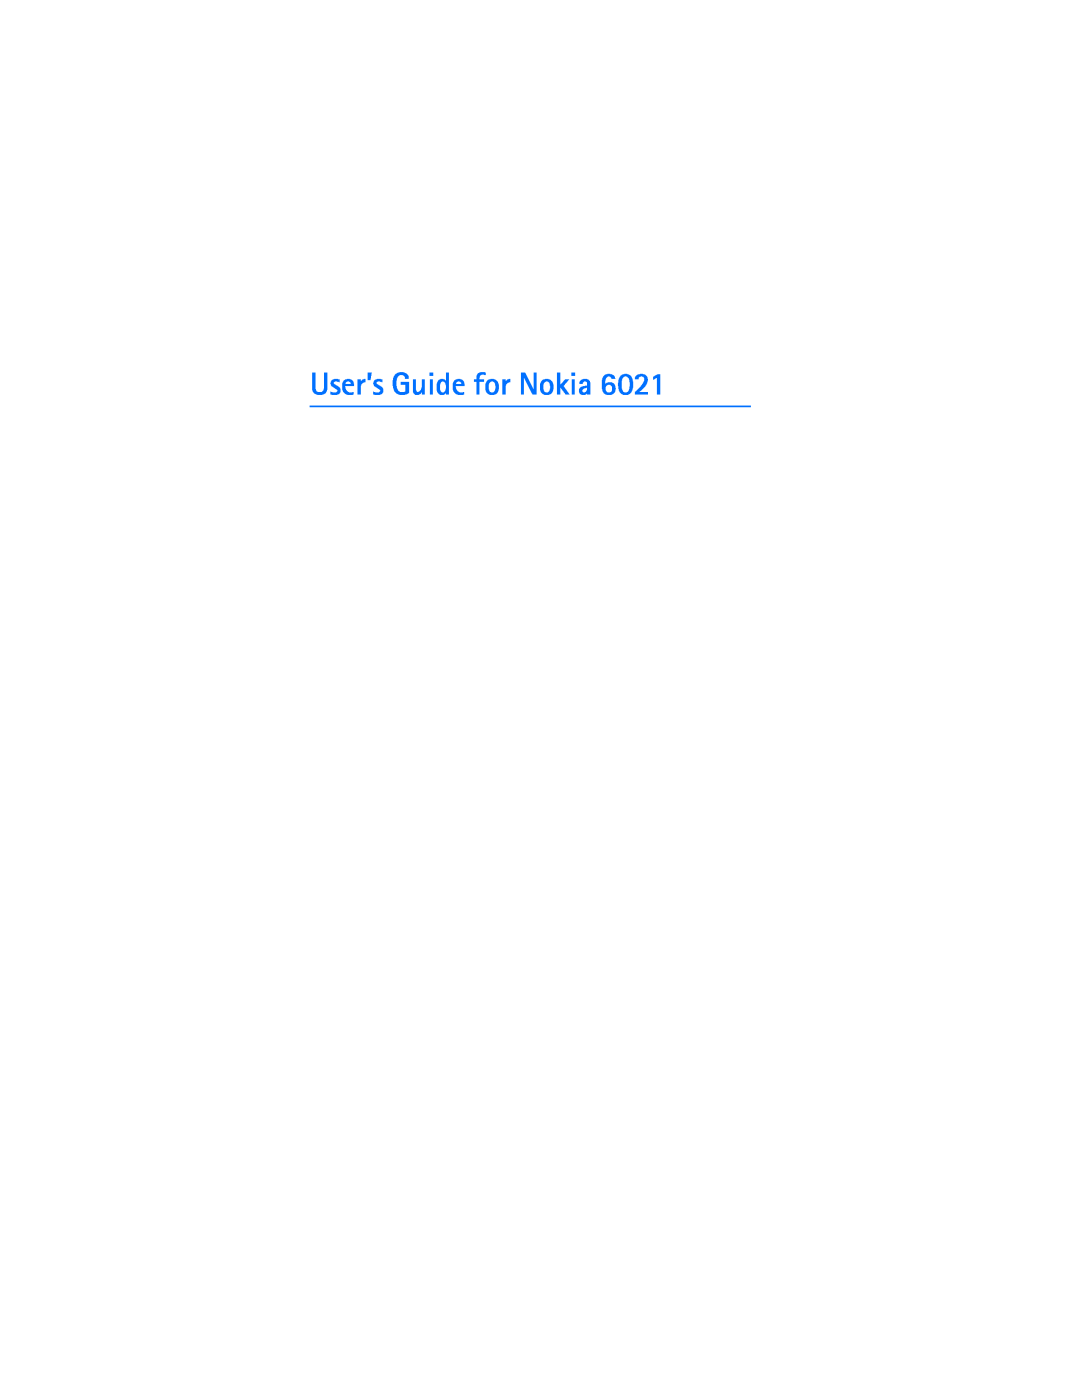 Sonic Alert 6021 manual User’s Guide for Nokia 